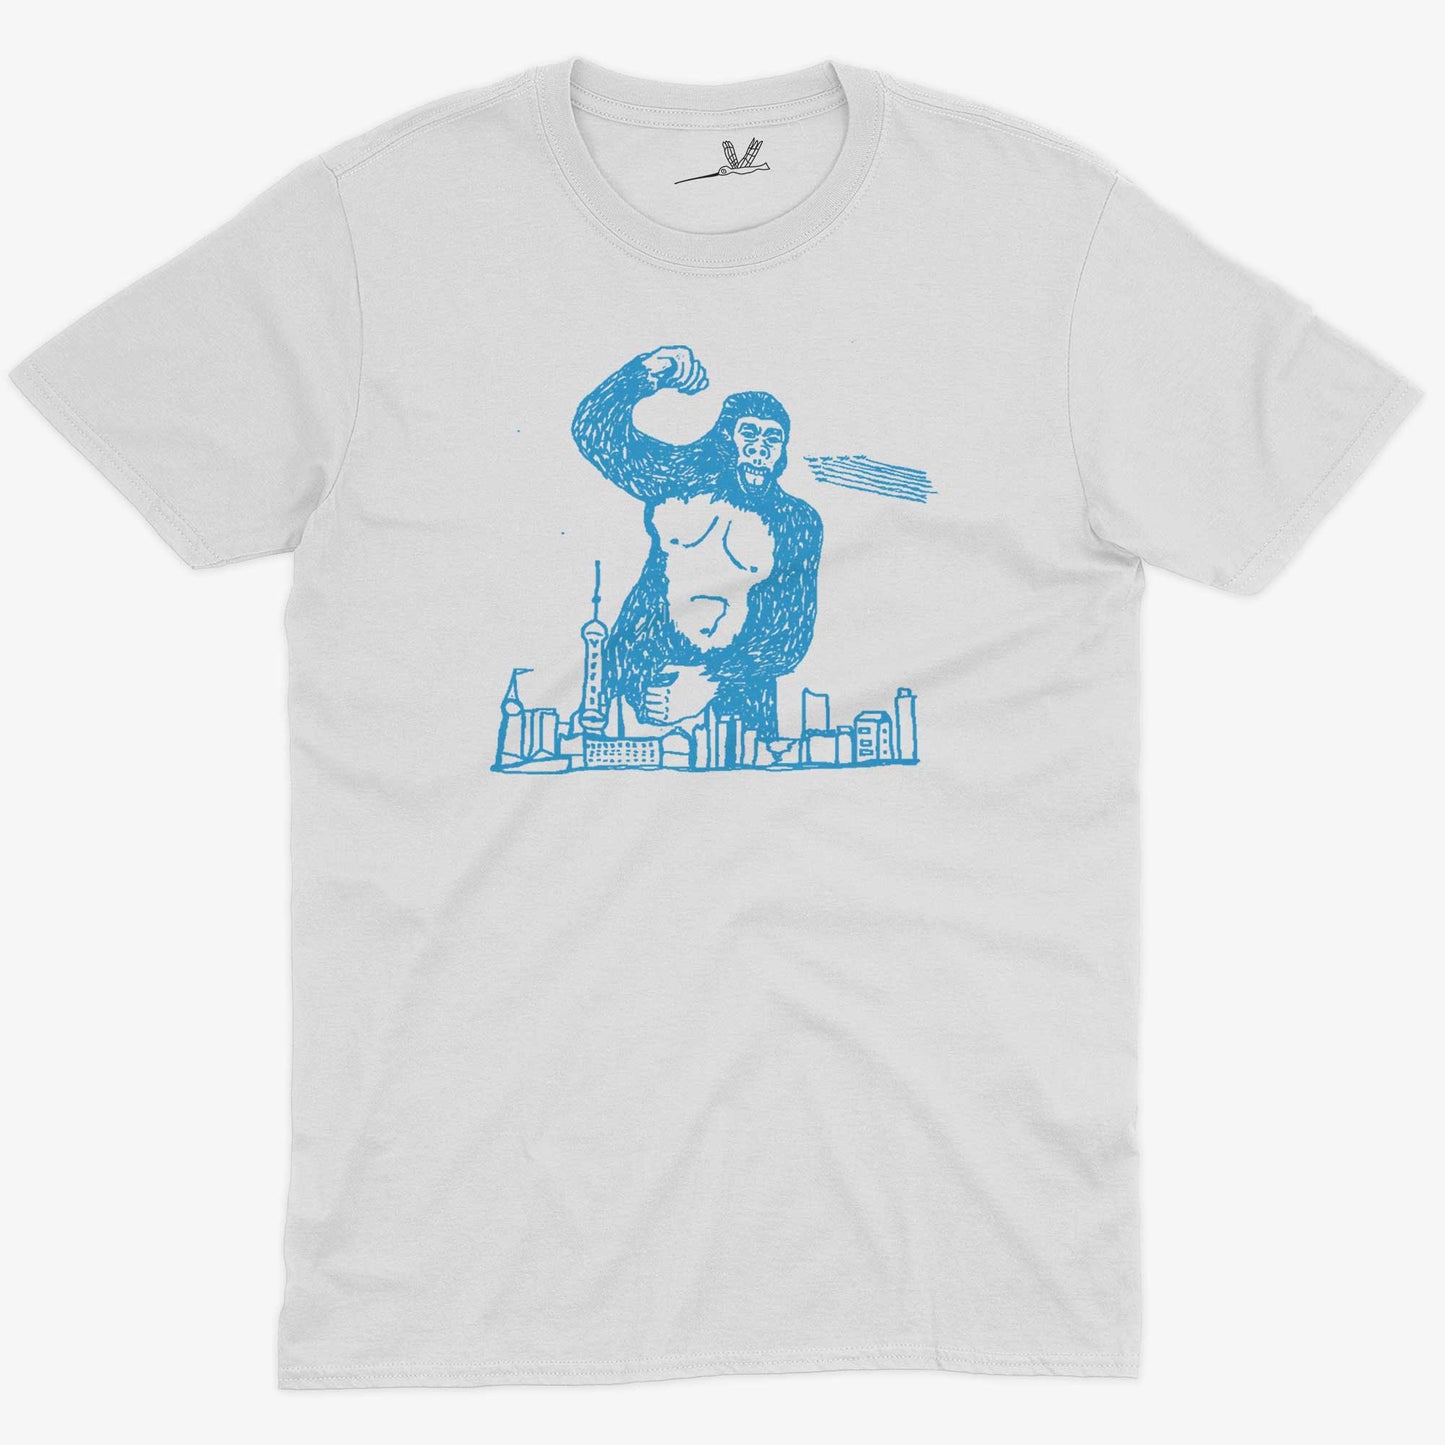 Giant Gorilla Drawing Unisex Or Women's Cotton T-shirt-White-Unisex